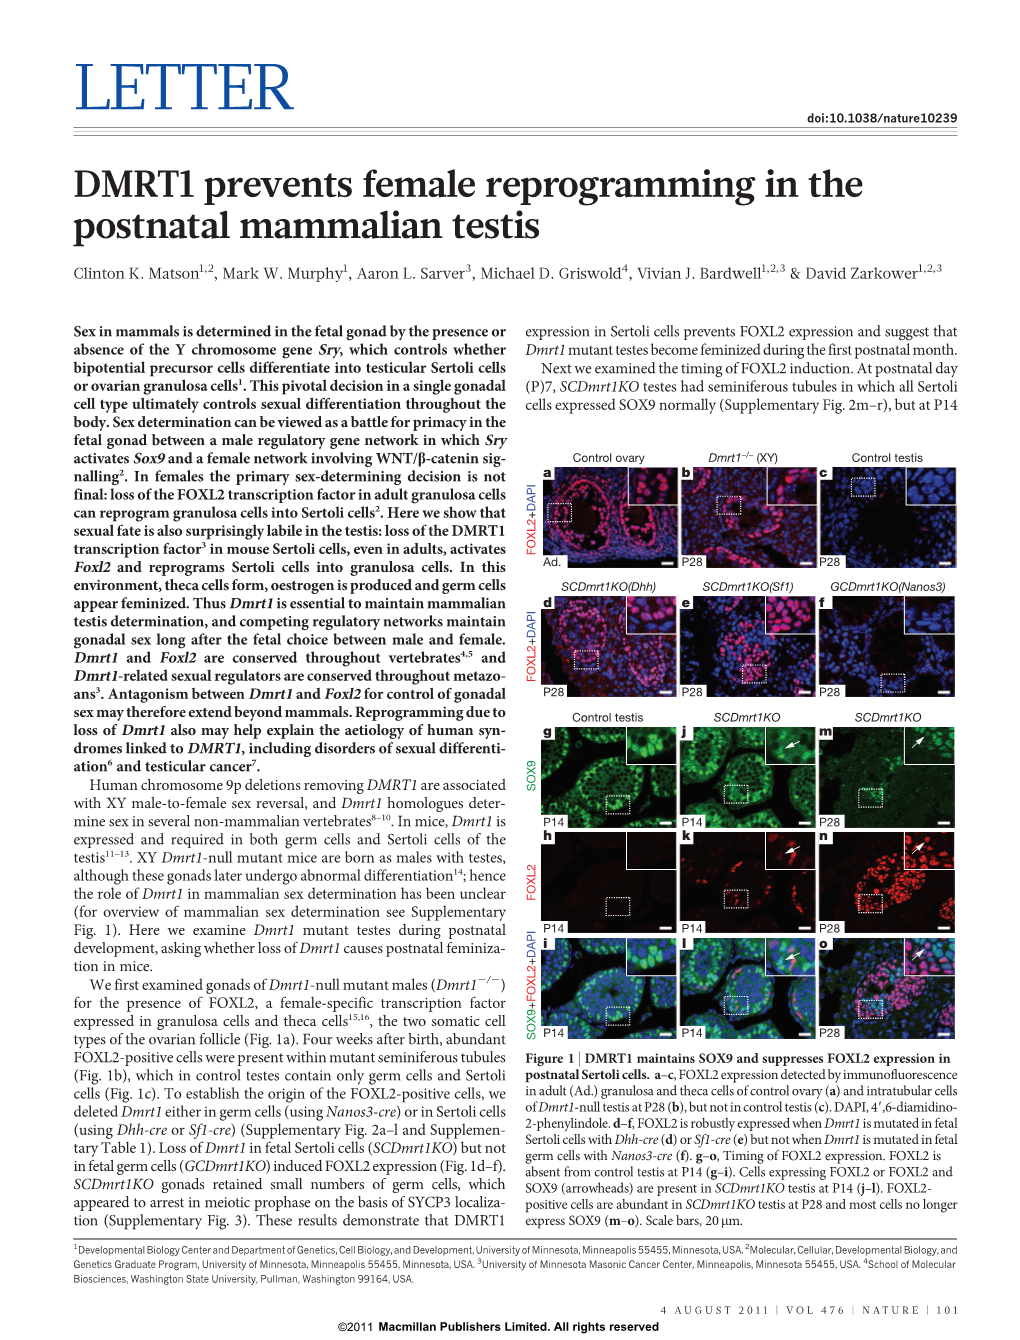 DMRT1 Prevents Female Reprogramming in the Postnatal Mammalian Testis